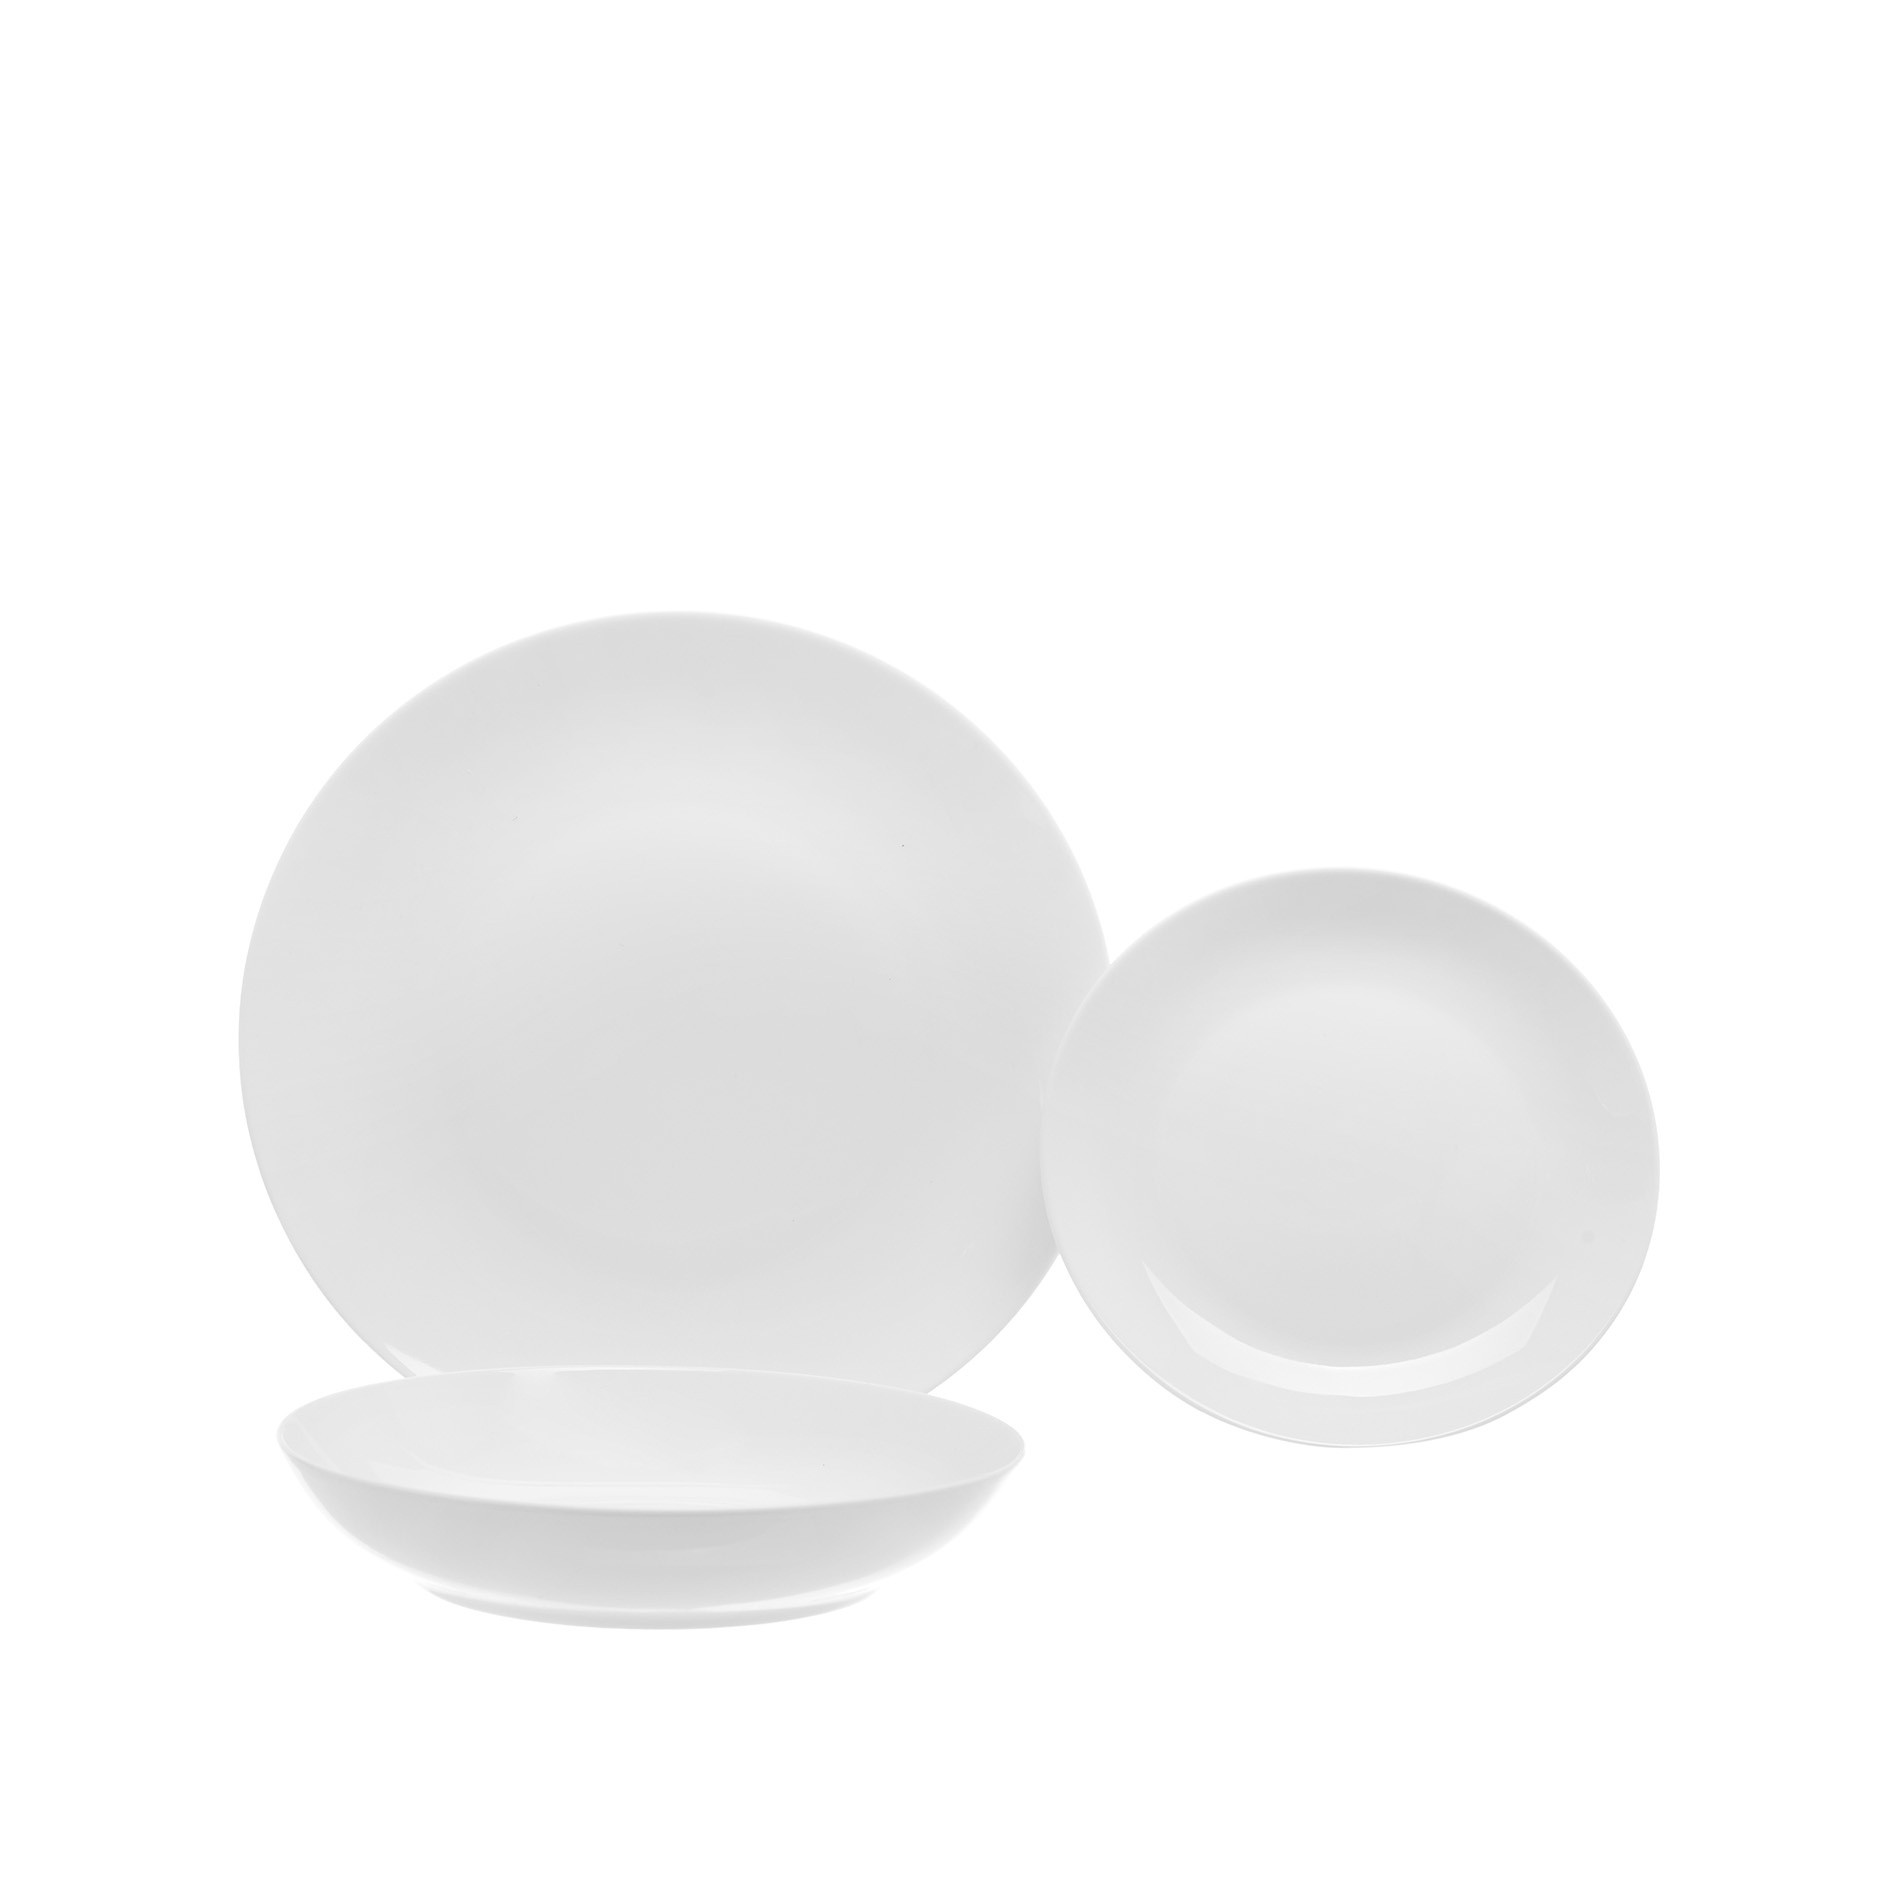 Coupe set of 18 white porcelain plates, White, large image number 0